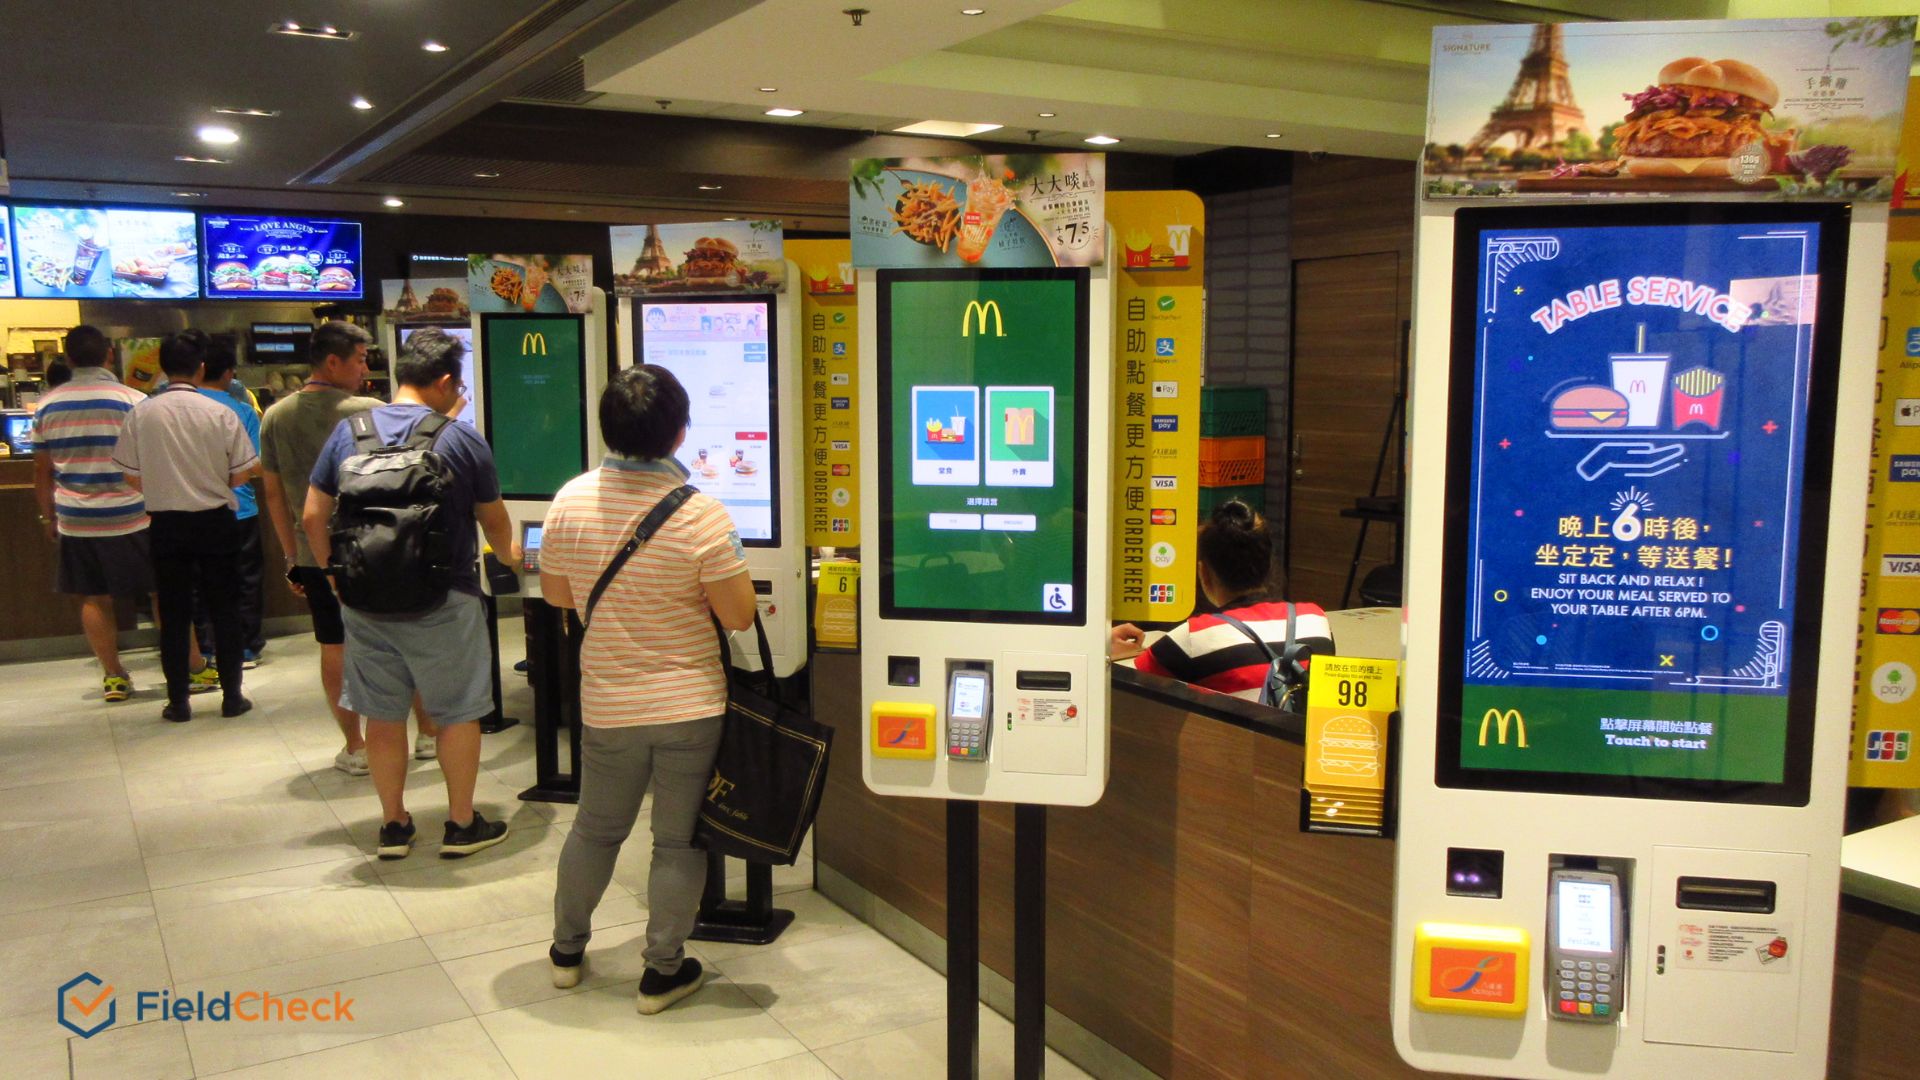 mc donald's automated ordering kiosk